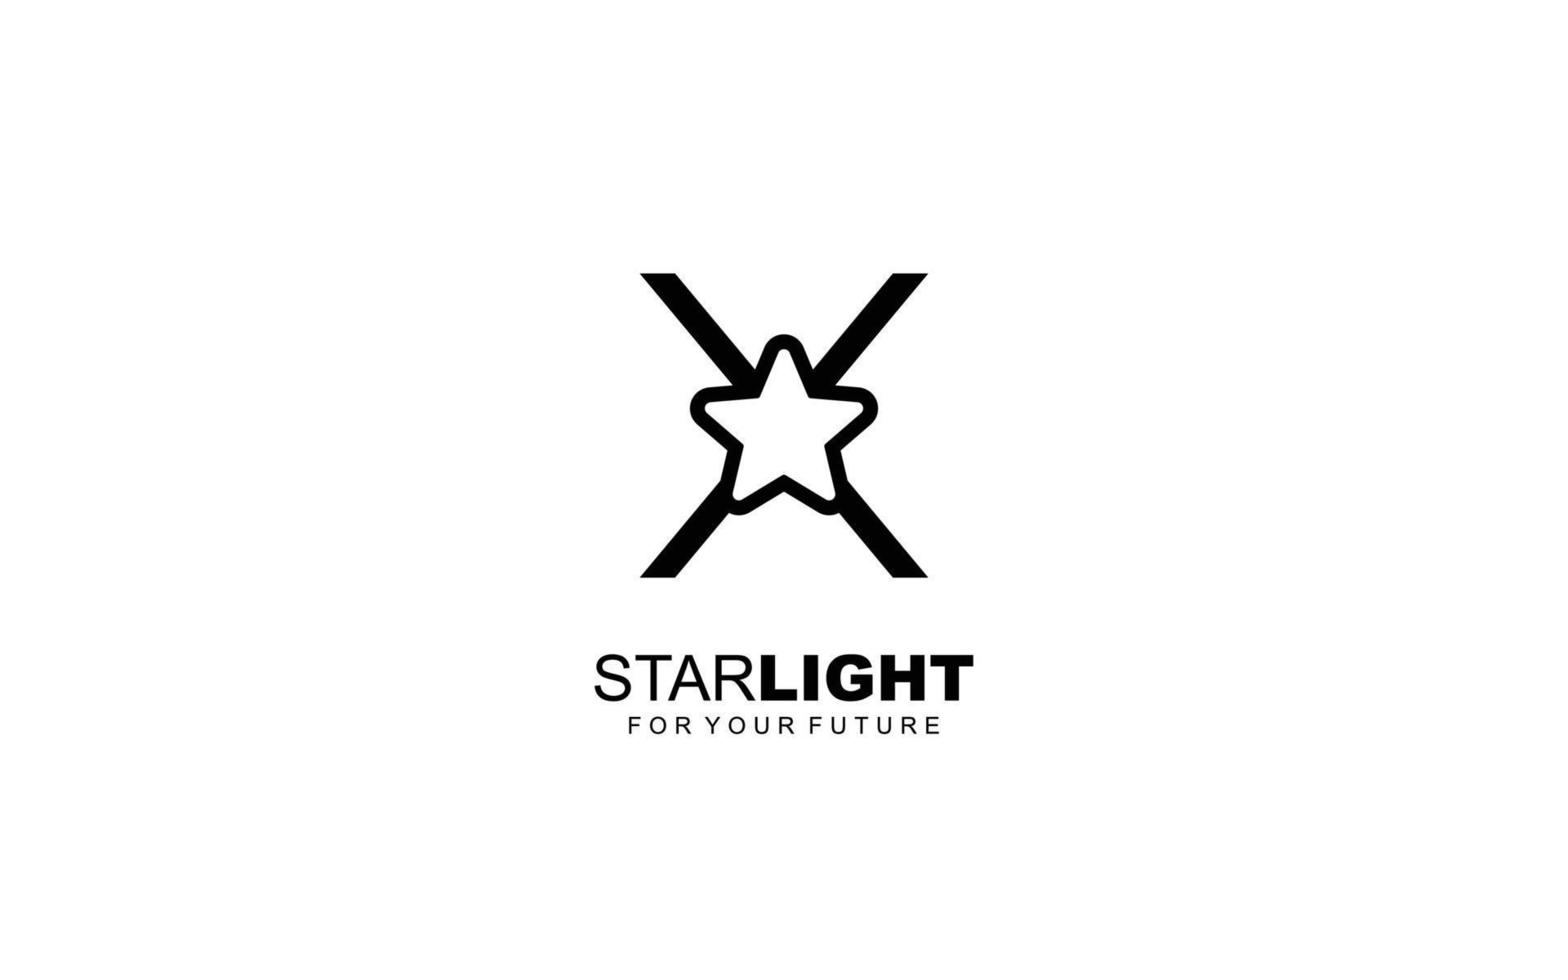 X logo star for branding company. letter template vector illustration for your brand.